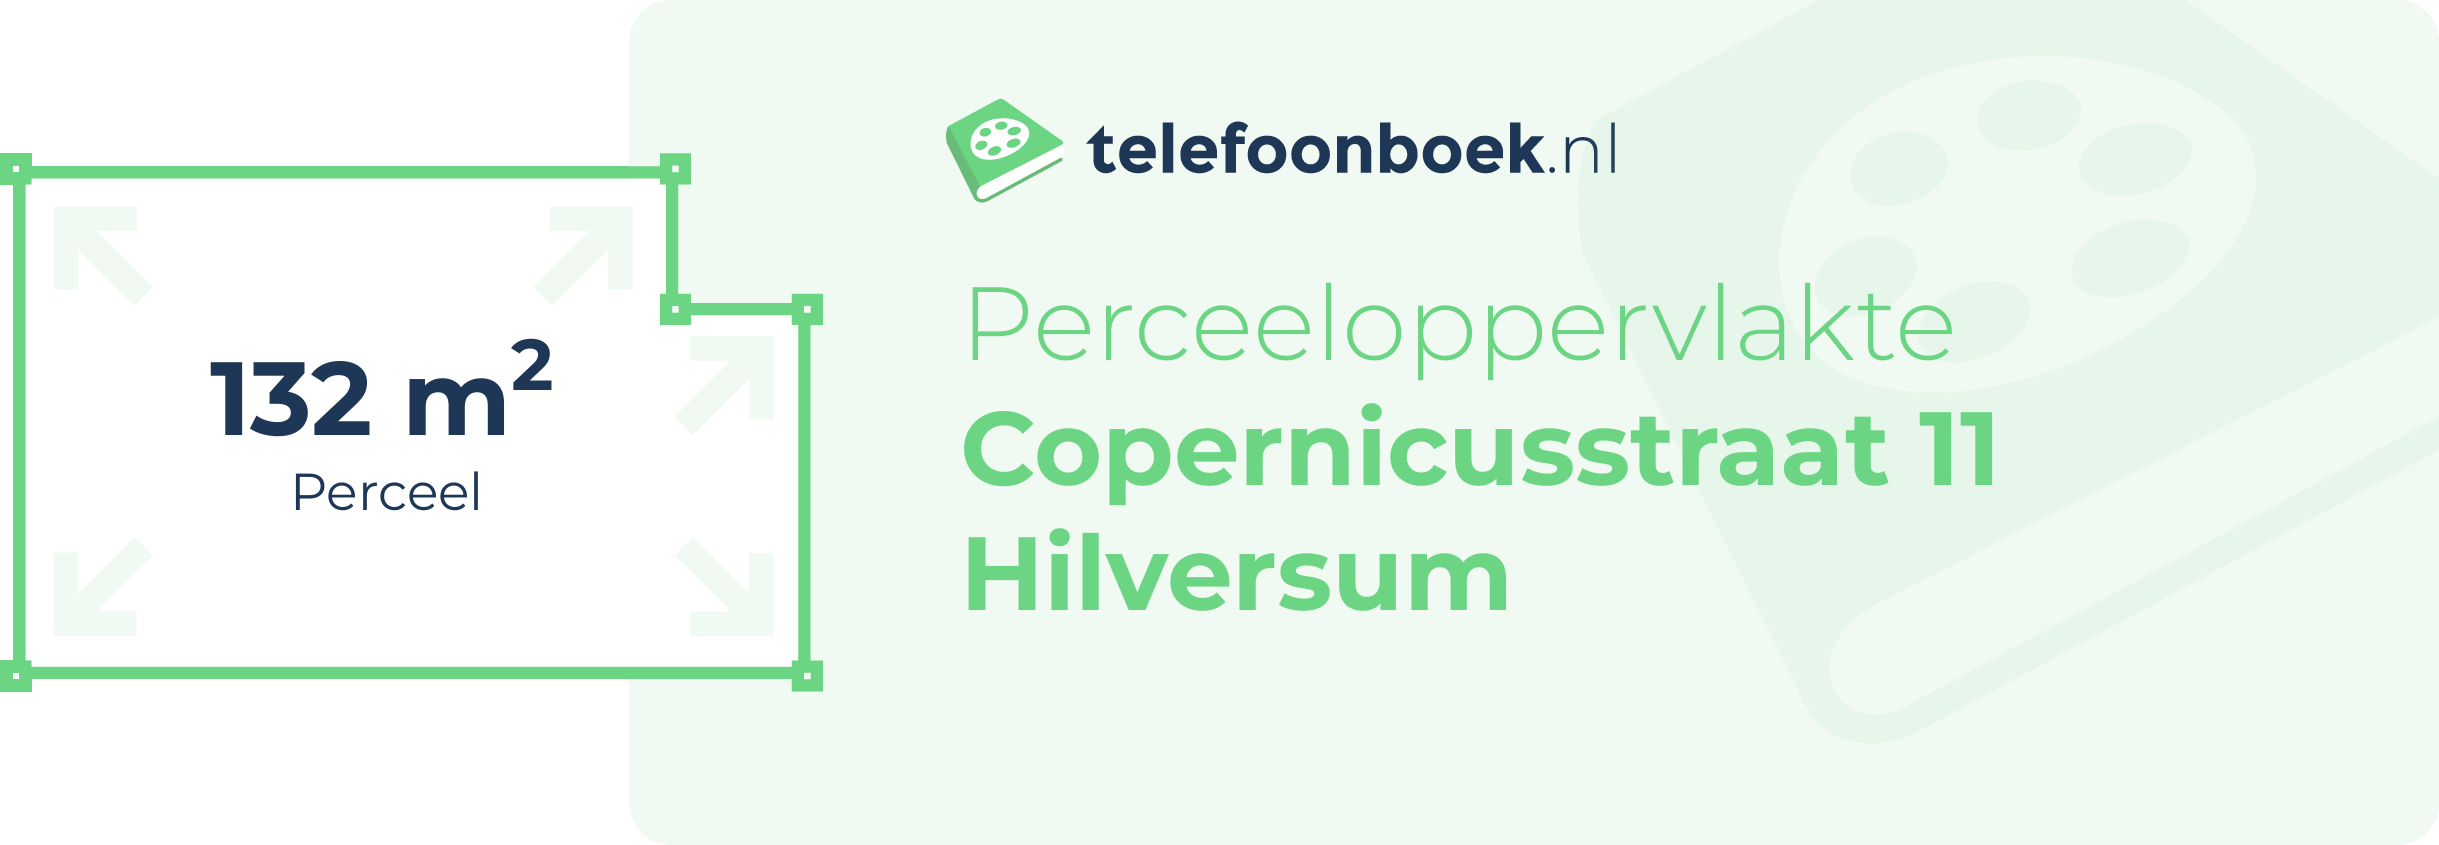 Perceeloppervlakte Copernicusstraat 11 Hilversum